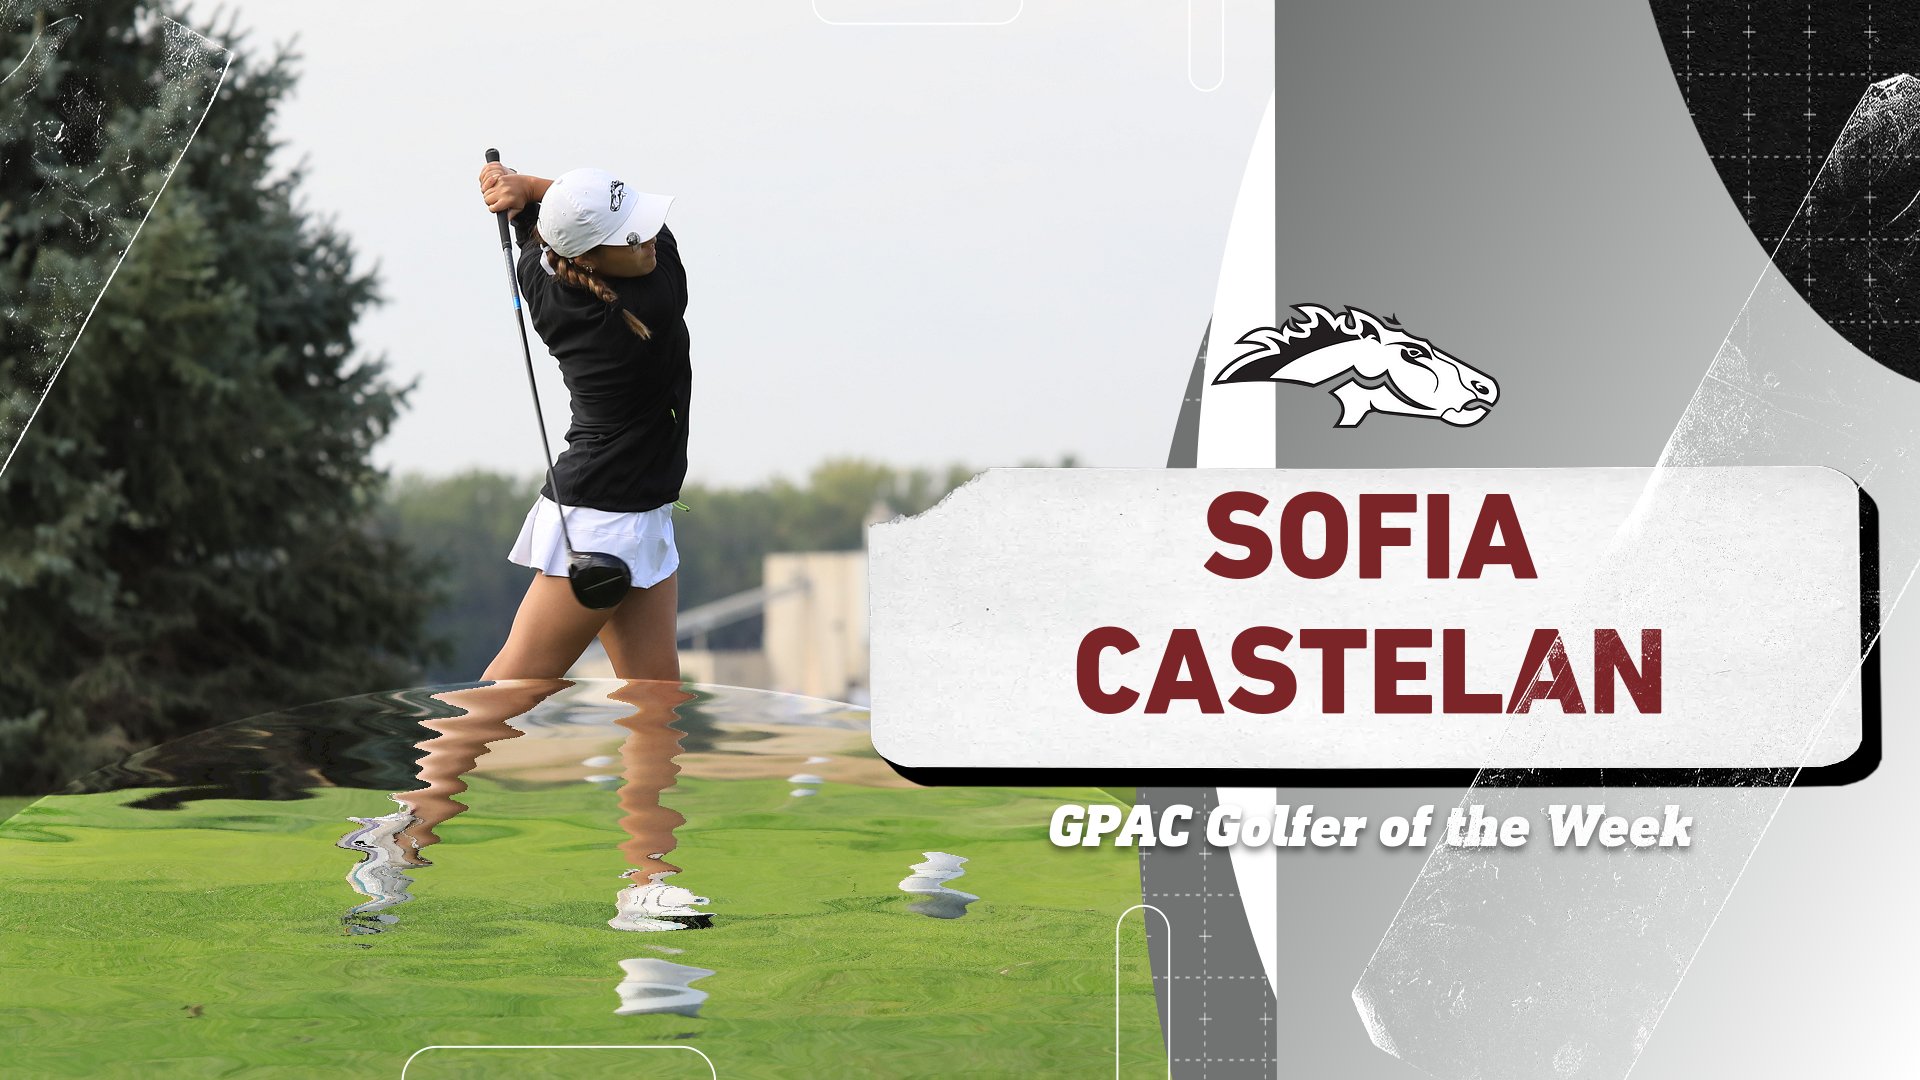 Castelan grabs her fourth GPAC Golfer of the Week award of the season